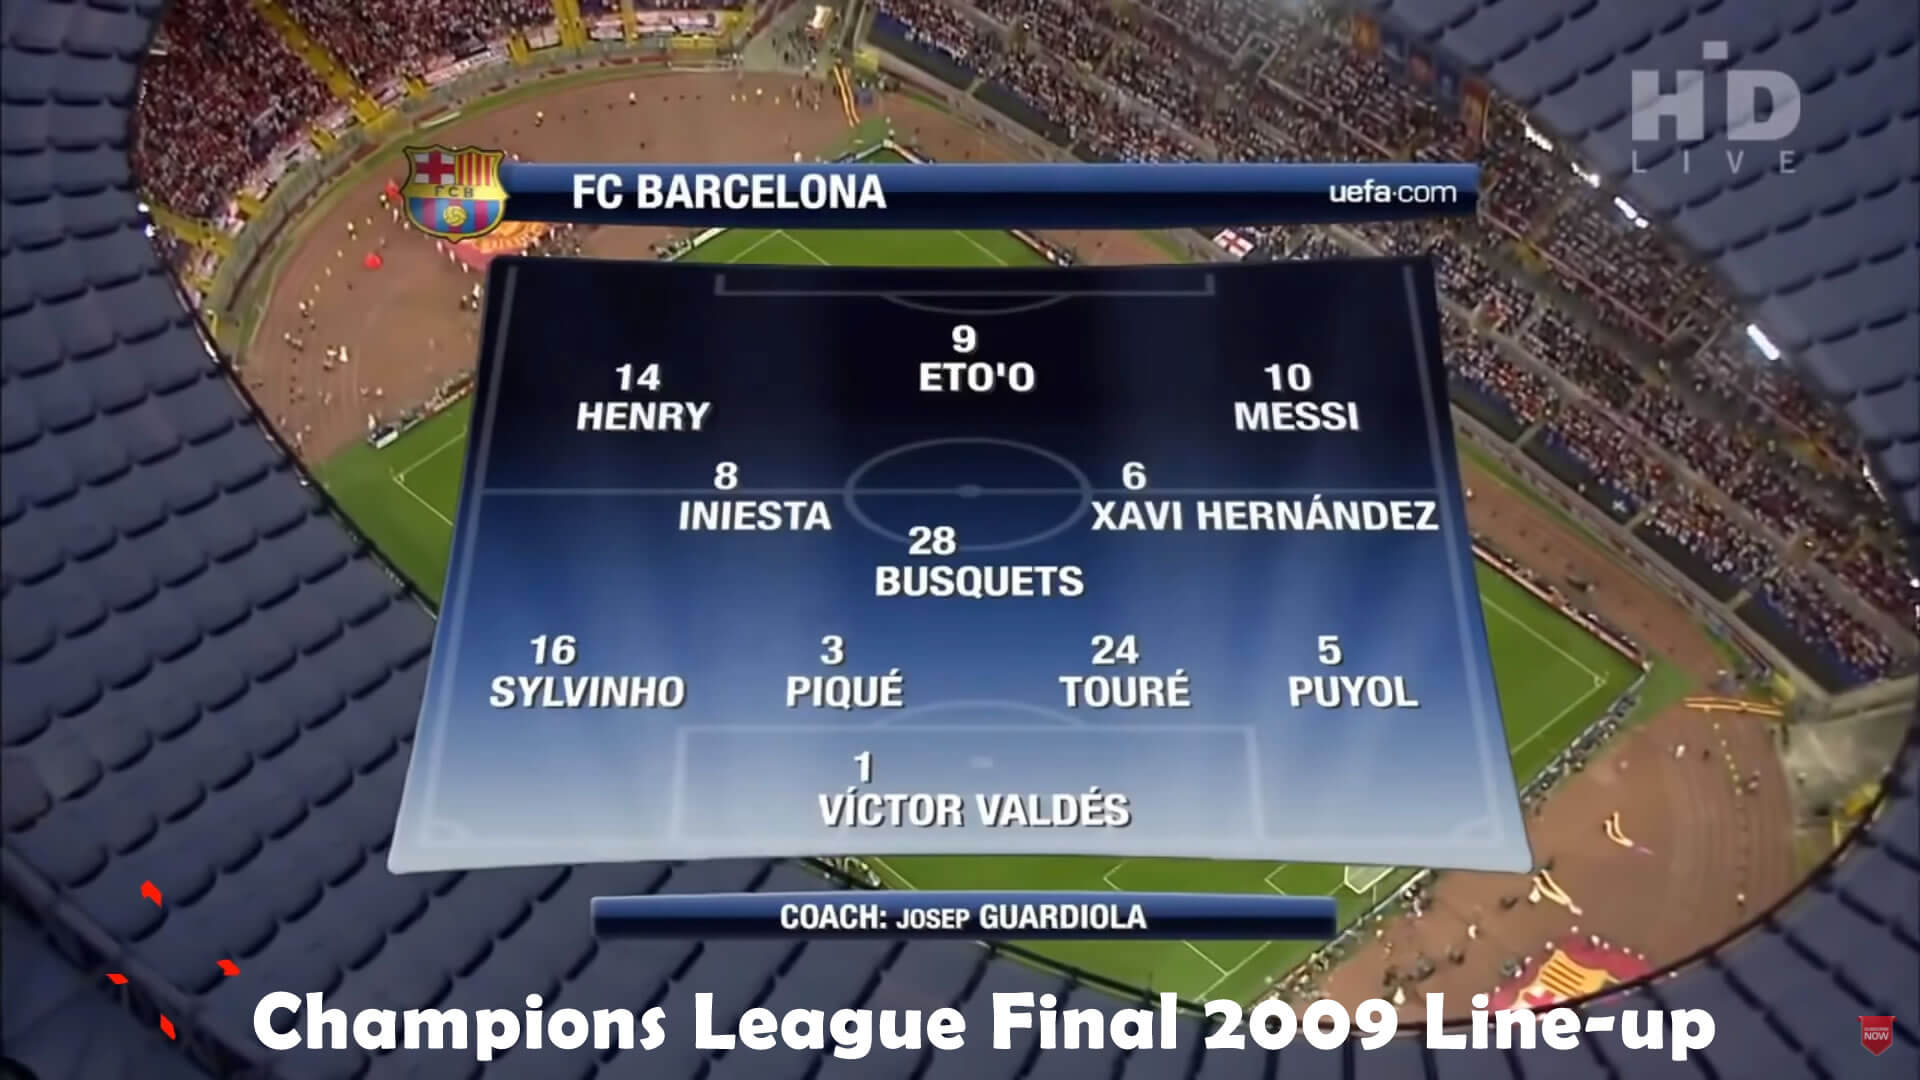 2009 UEFA Champions League Final LineUp - Barcelona